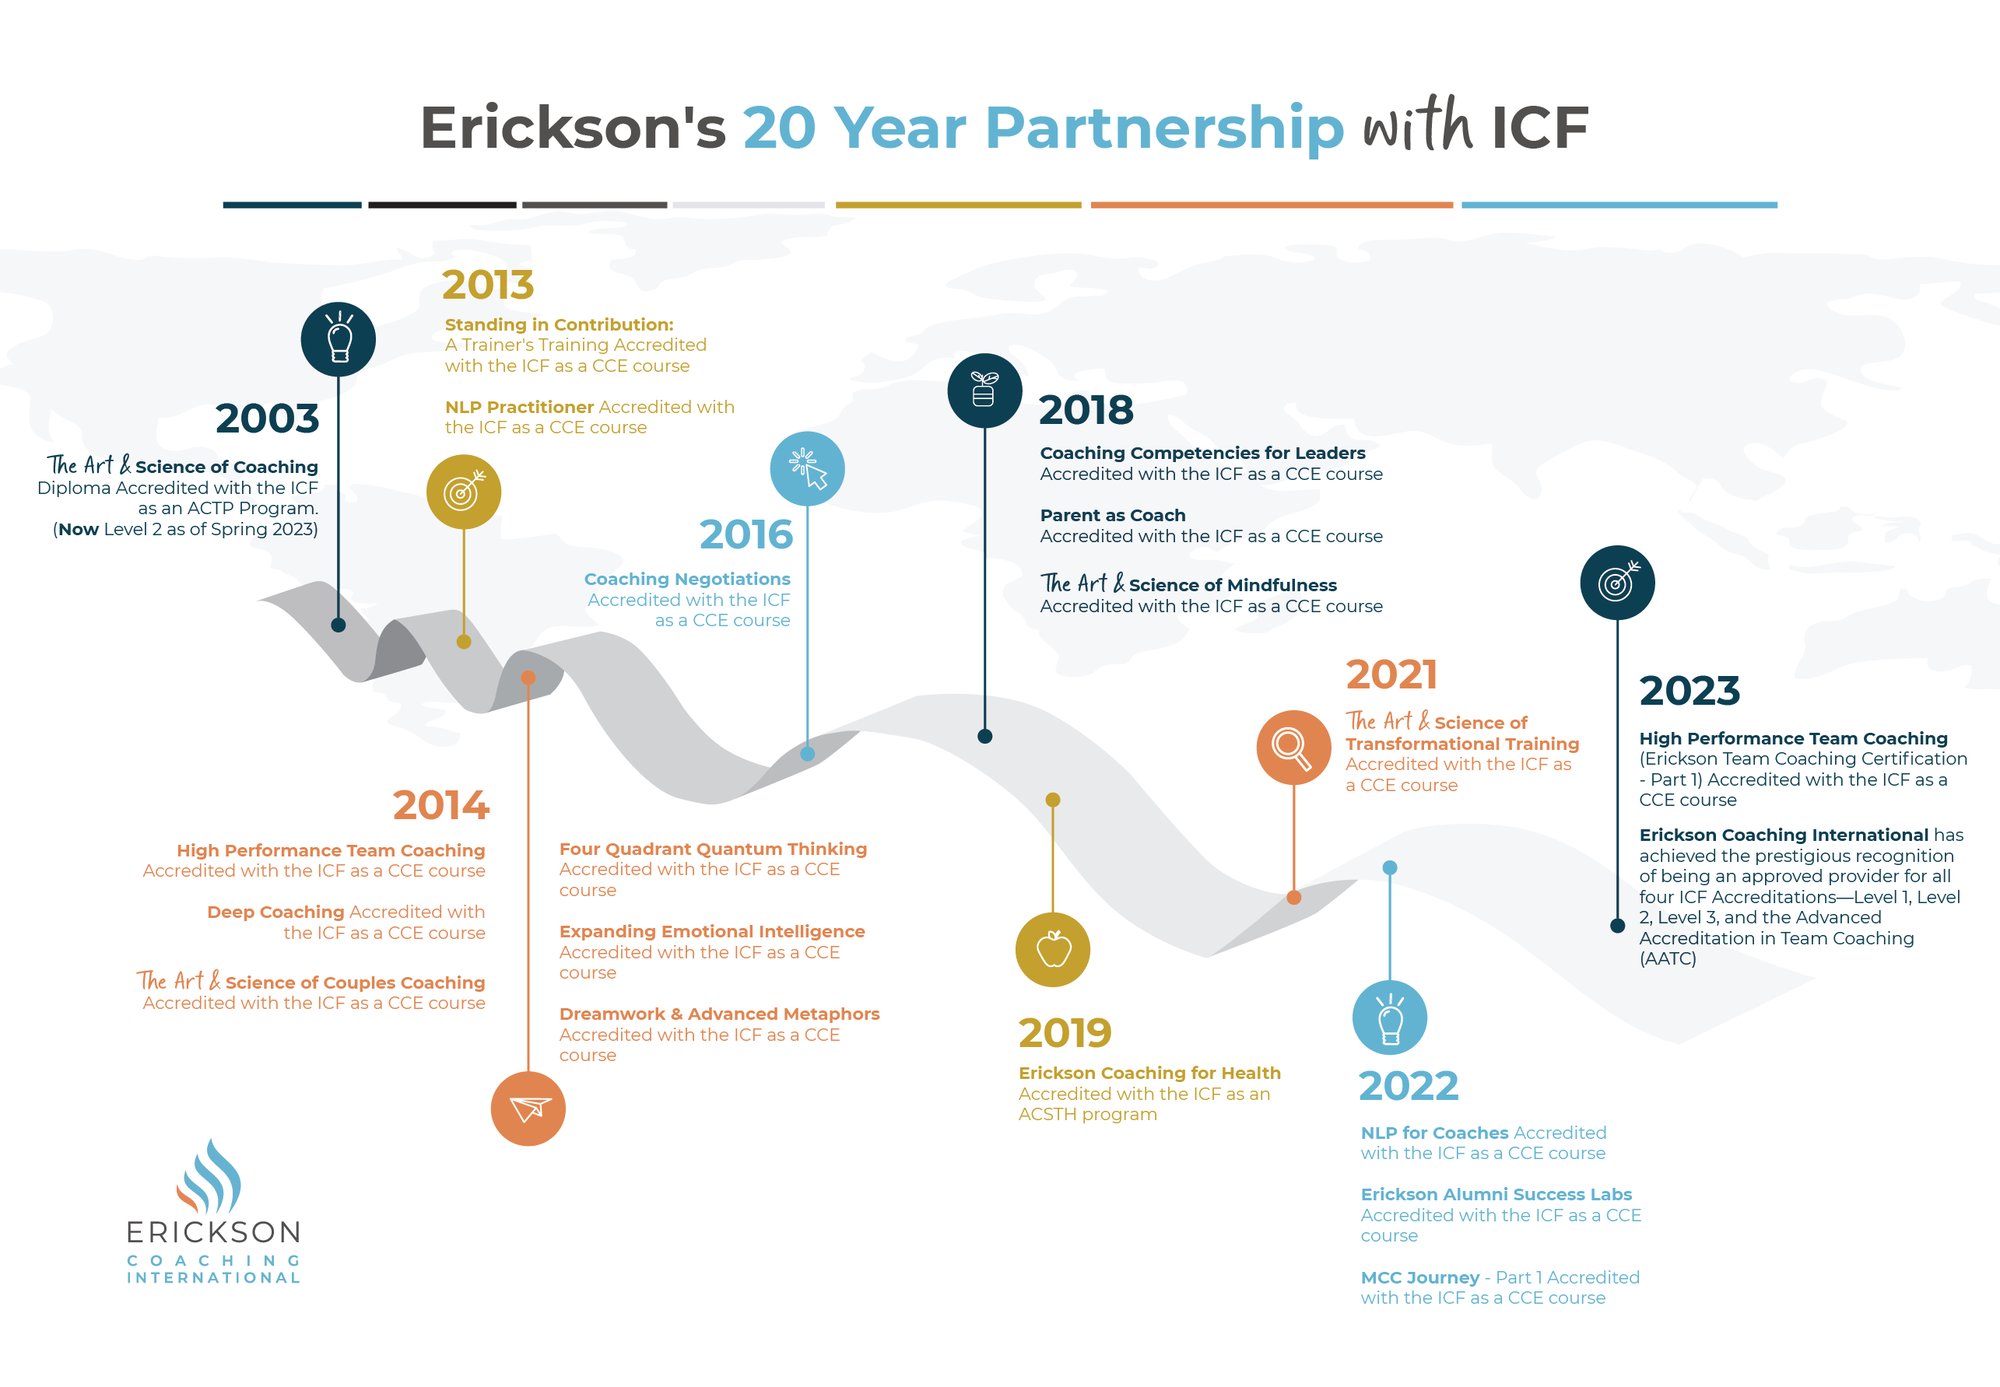 Erickson's 20 year partnership with the ICF